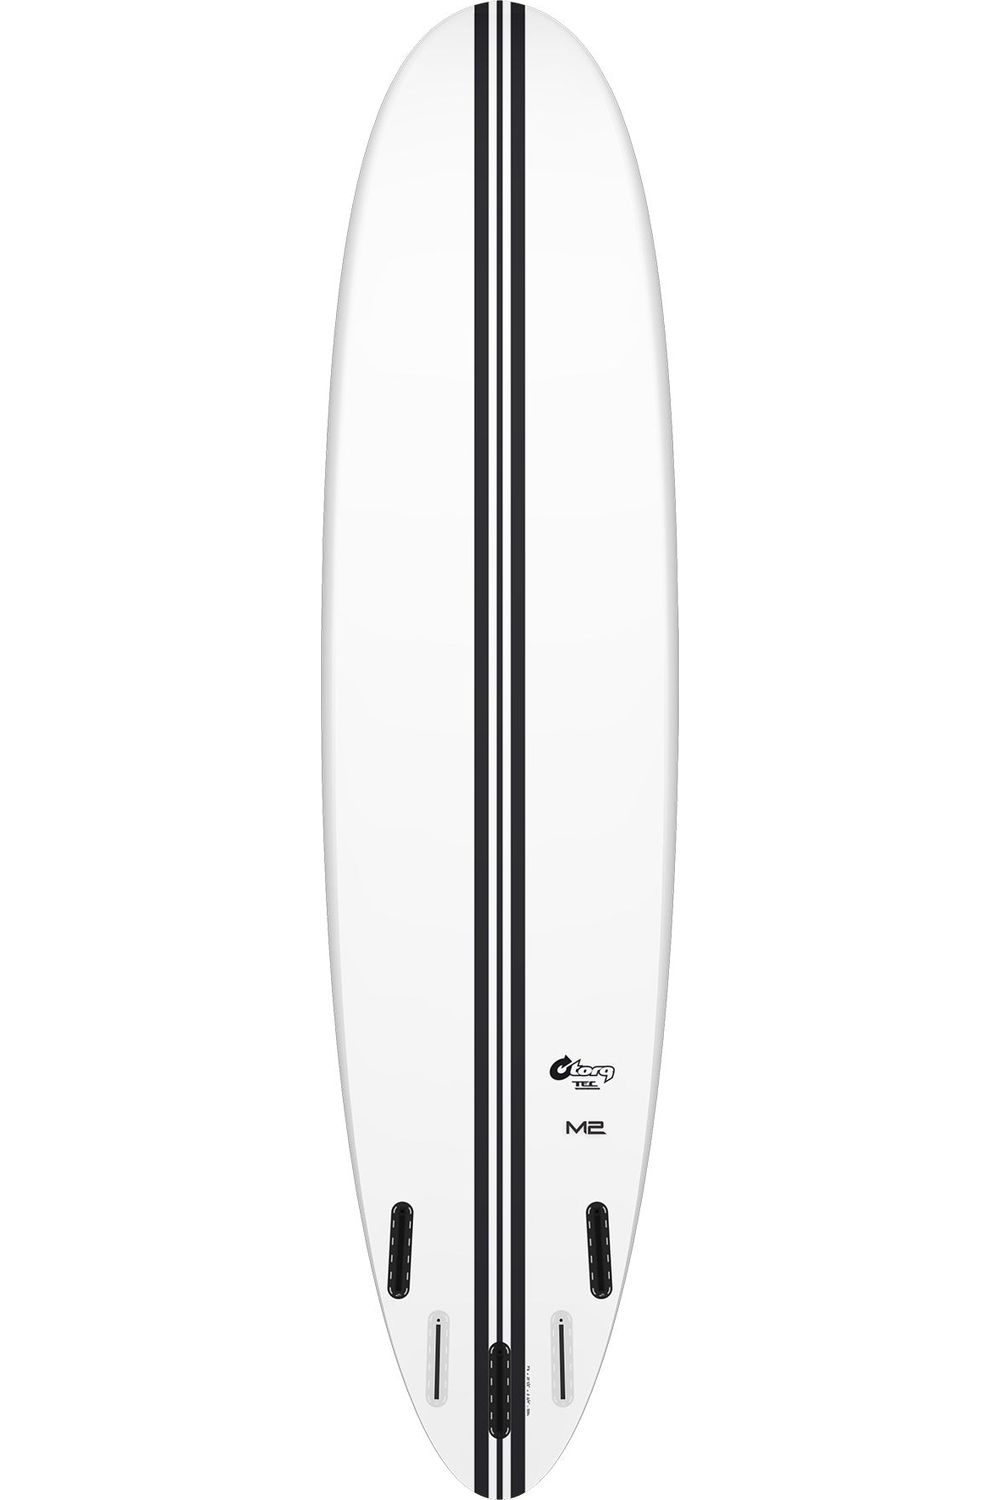 Torq TEC M2 Surfboard in White